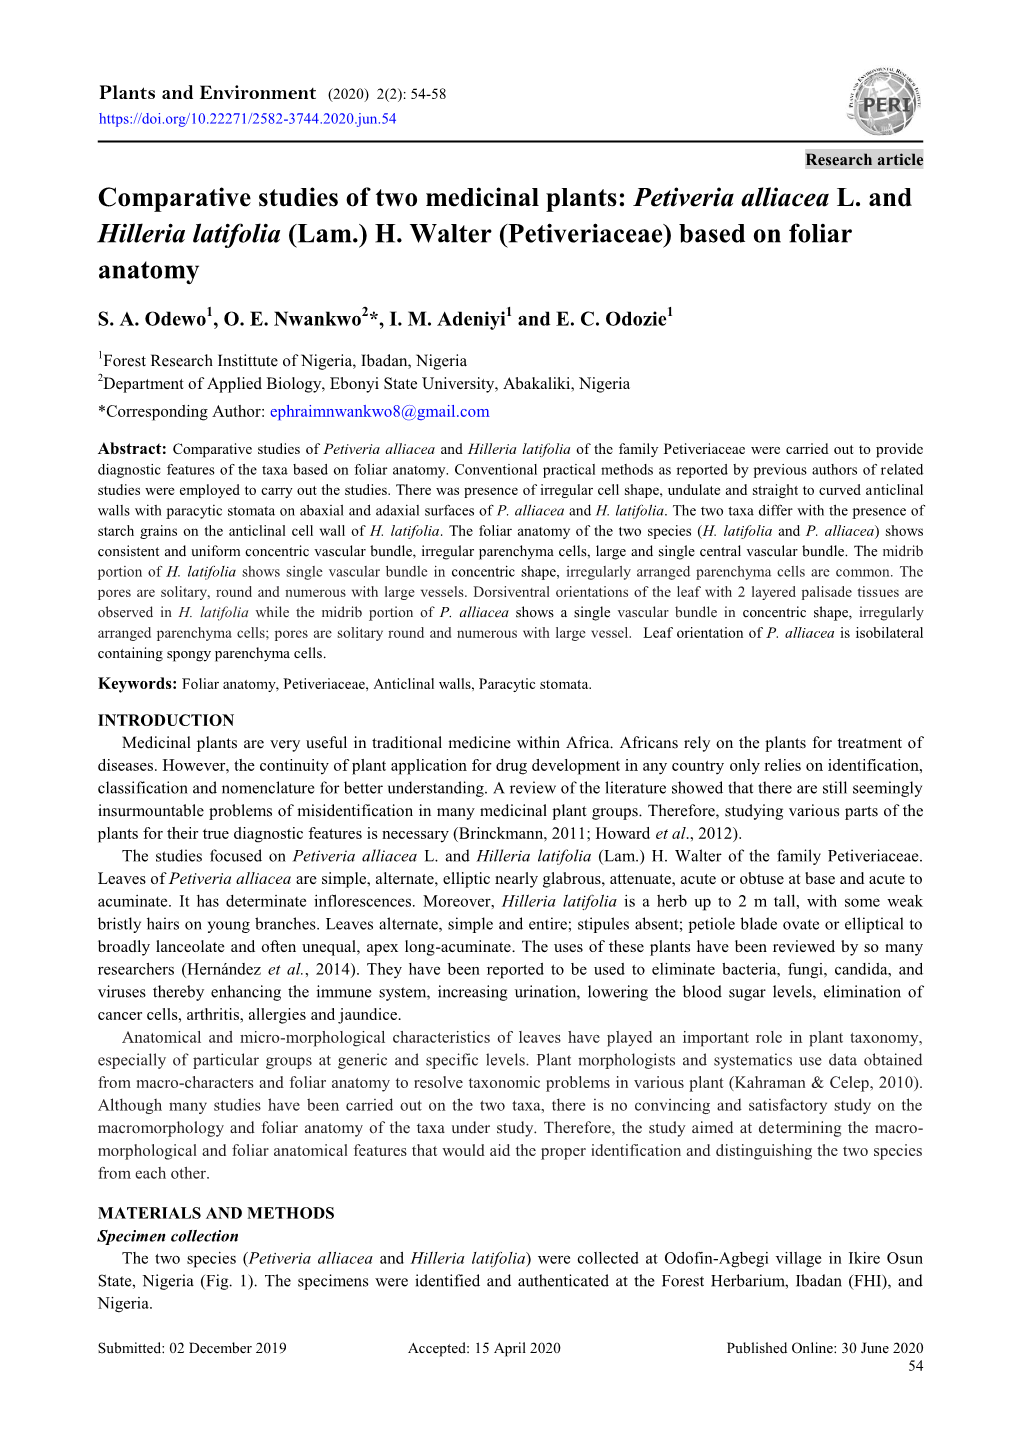 Comparative Studies of Two Medicinal Plants: Petiveria Alliacea L